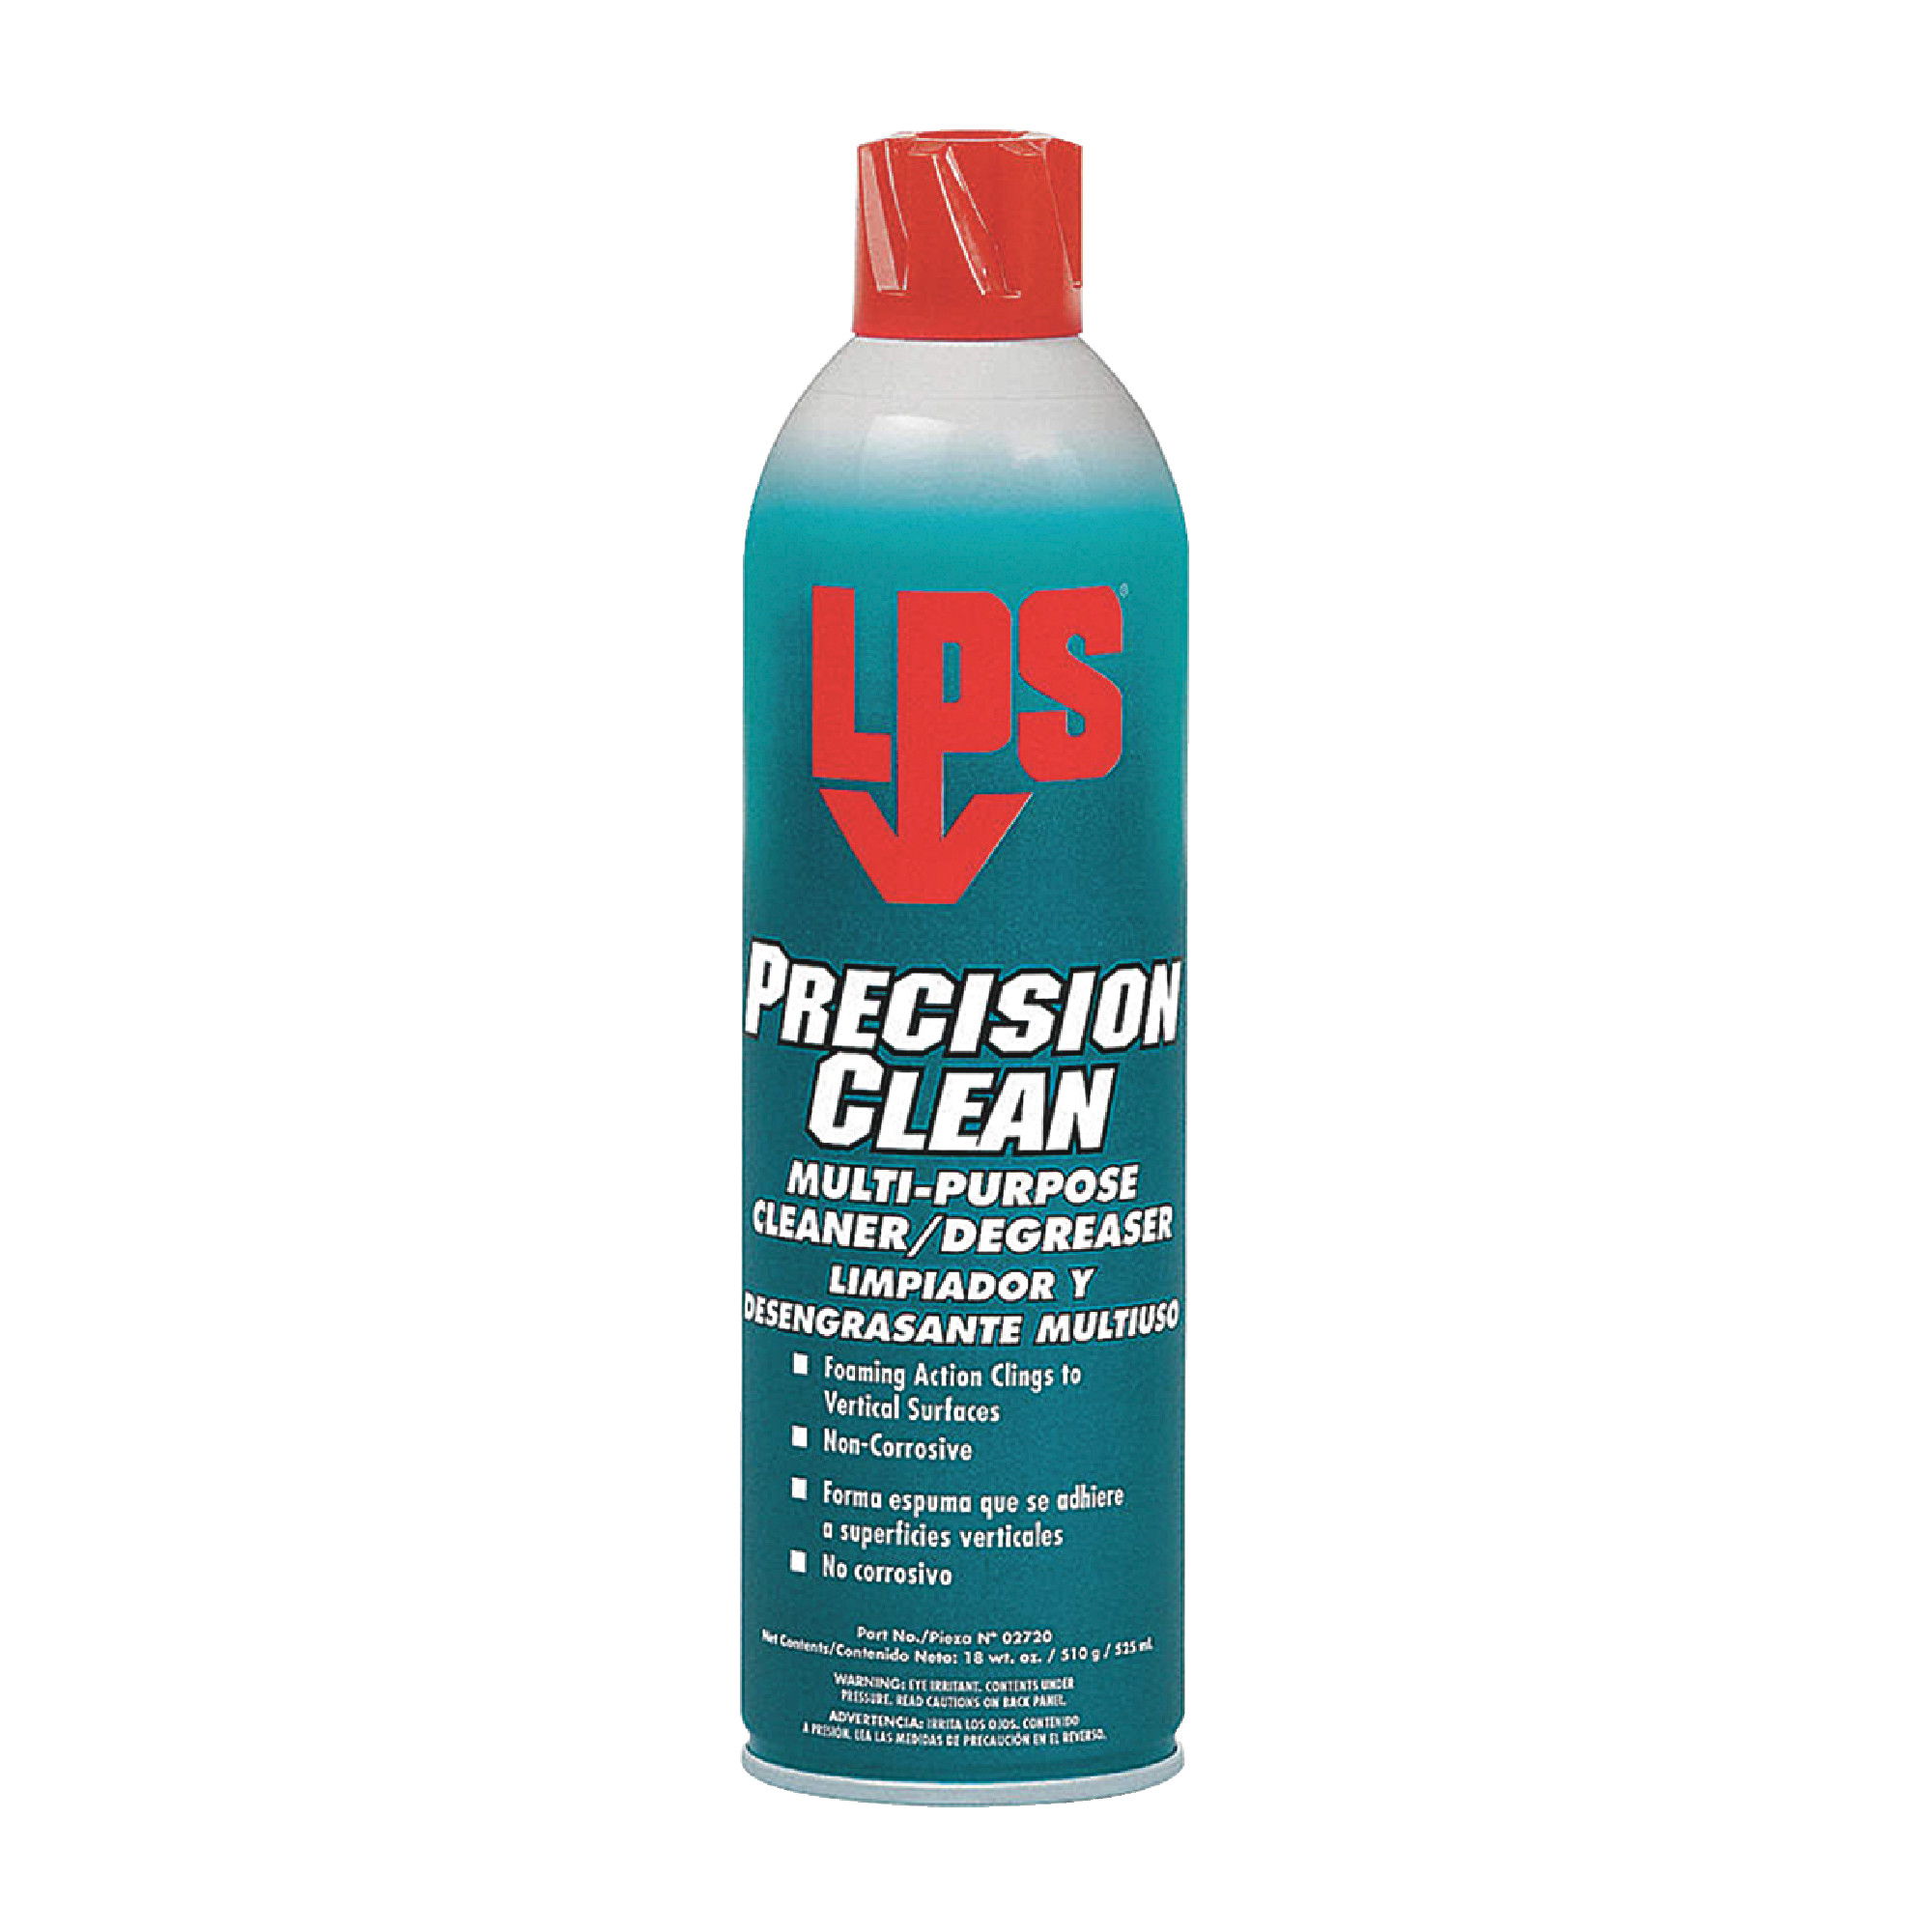 Precision Clean Multi-Purpose Cleaner/Degreaser